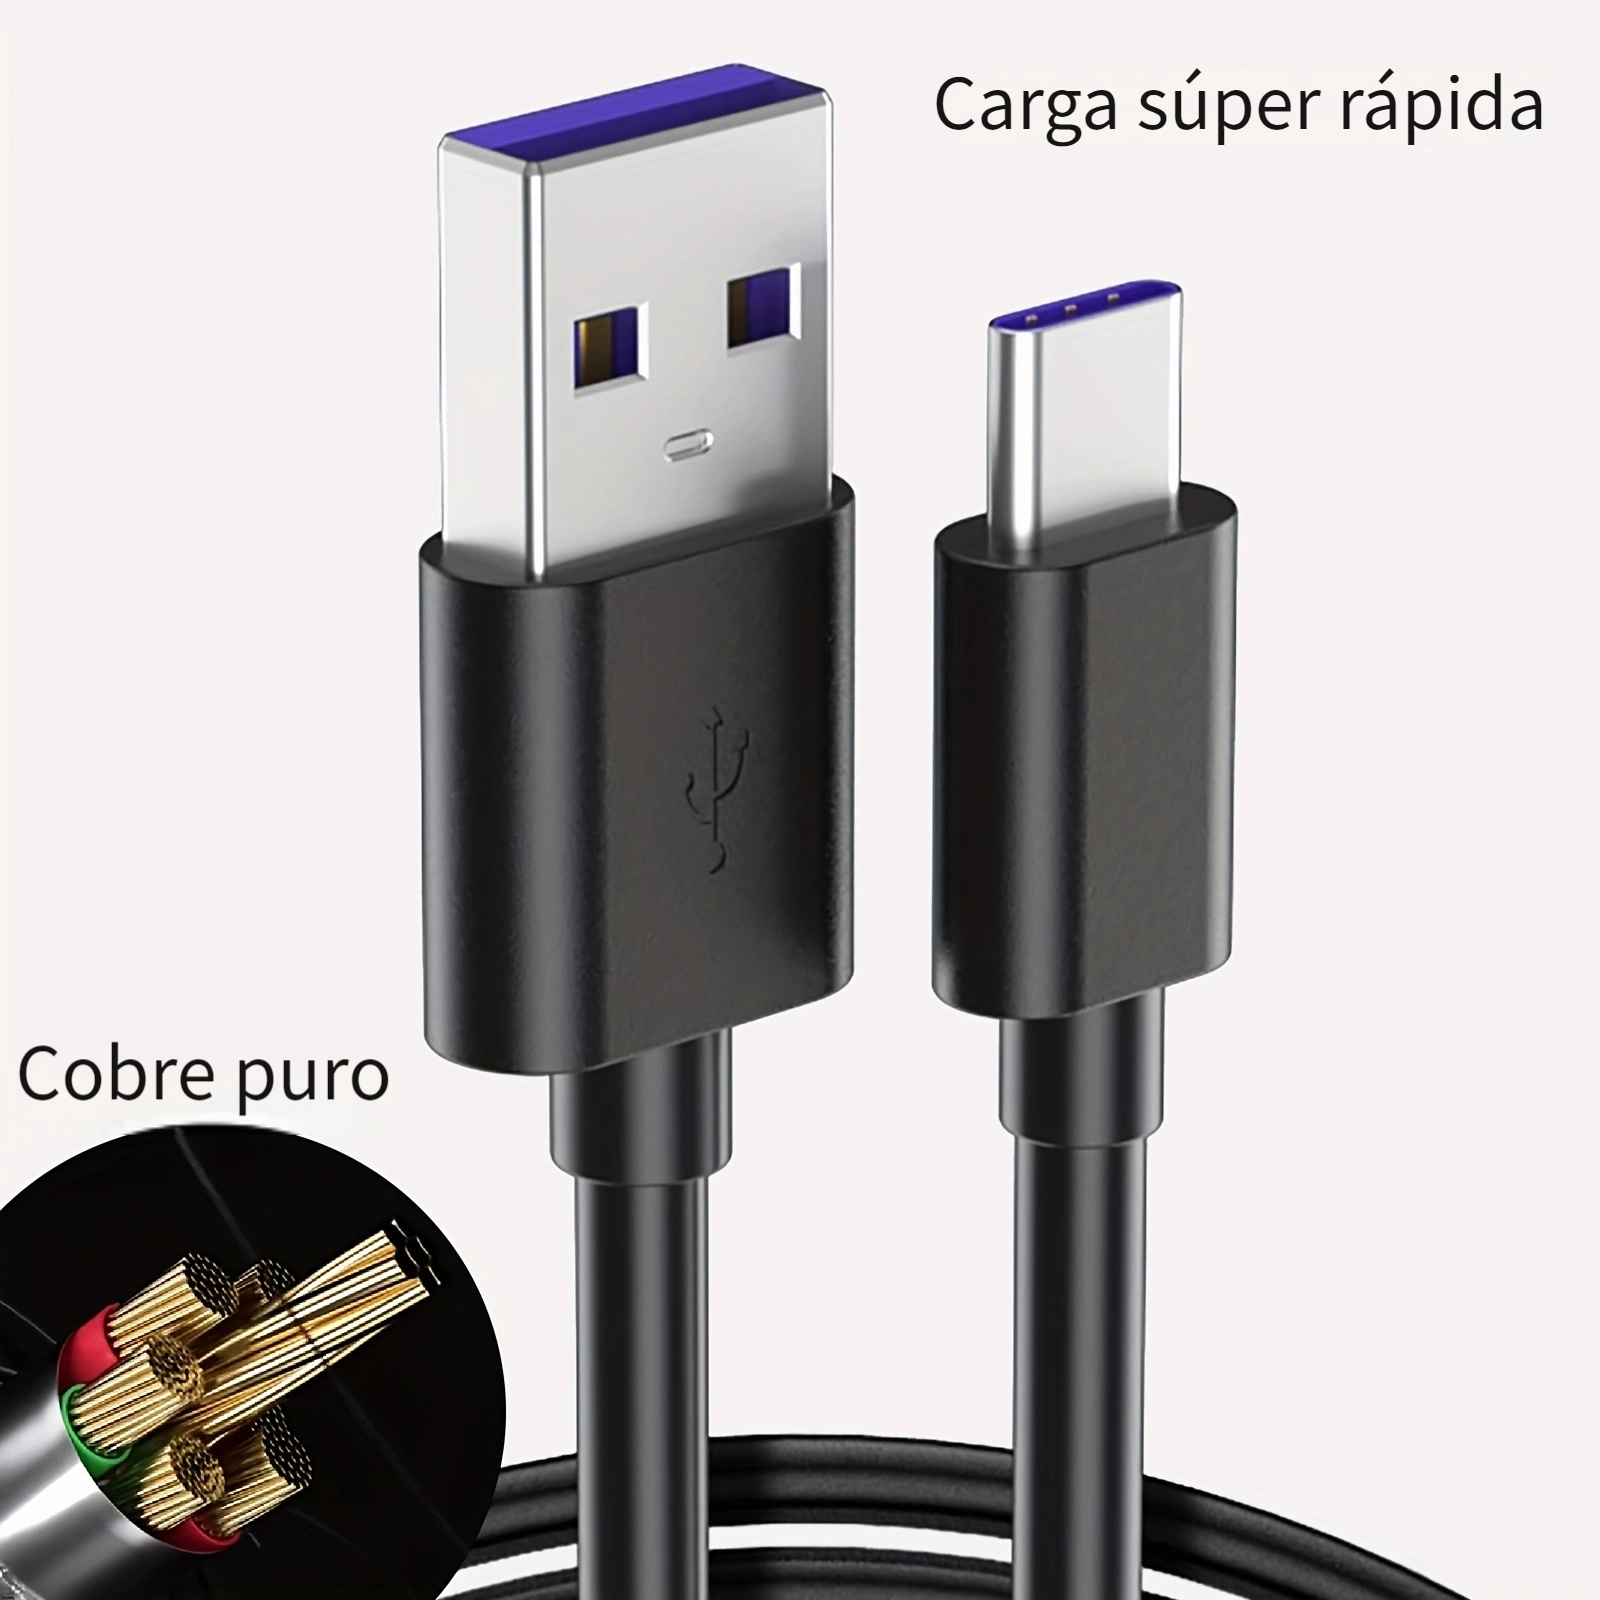  Cable de impresora, cable de impresora USB de 20 pies USB 2.0 A  macho a B macho Cable escáner de alta velocidad blindado USB A a B Cable  compatible con HP